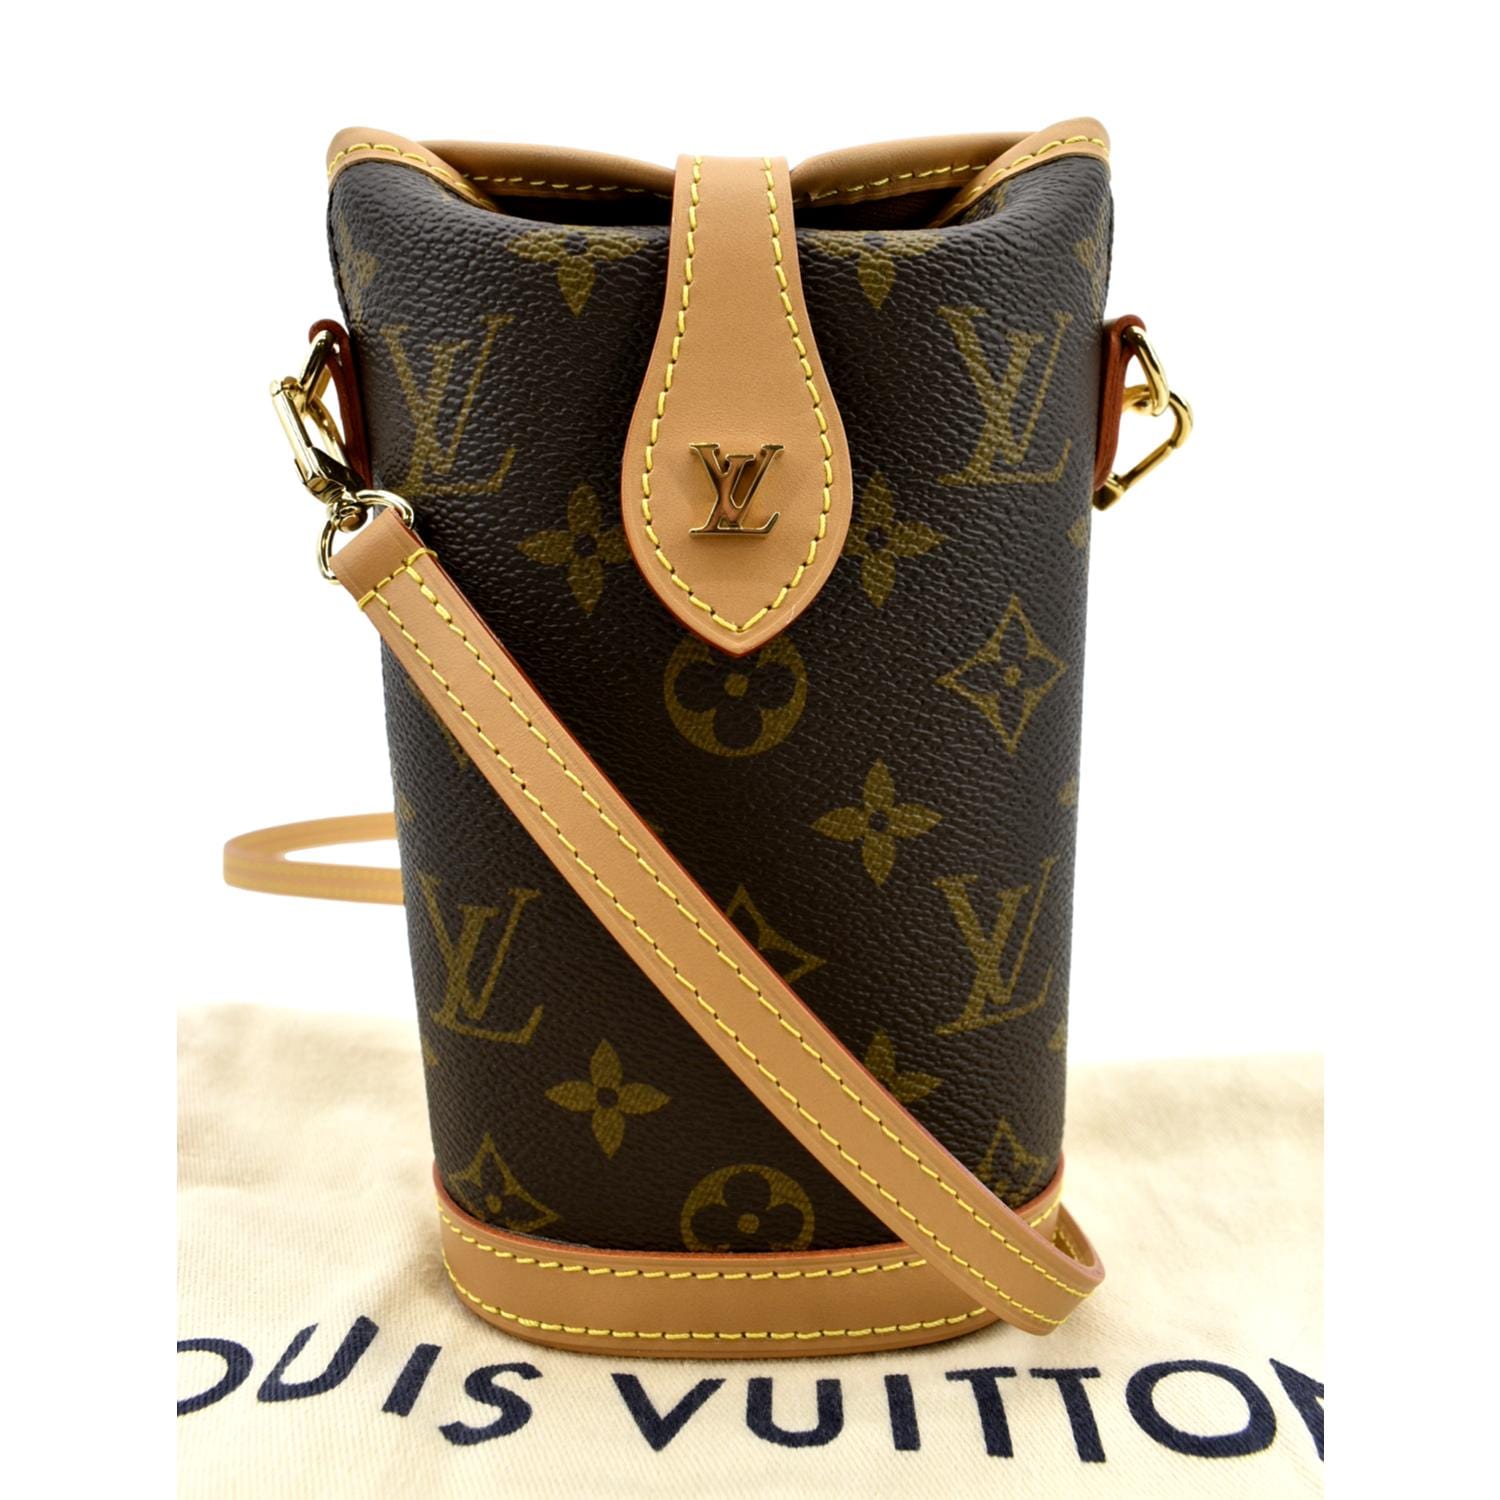 Louis Vuitton Fold Me Pouch